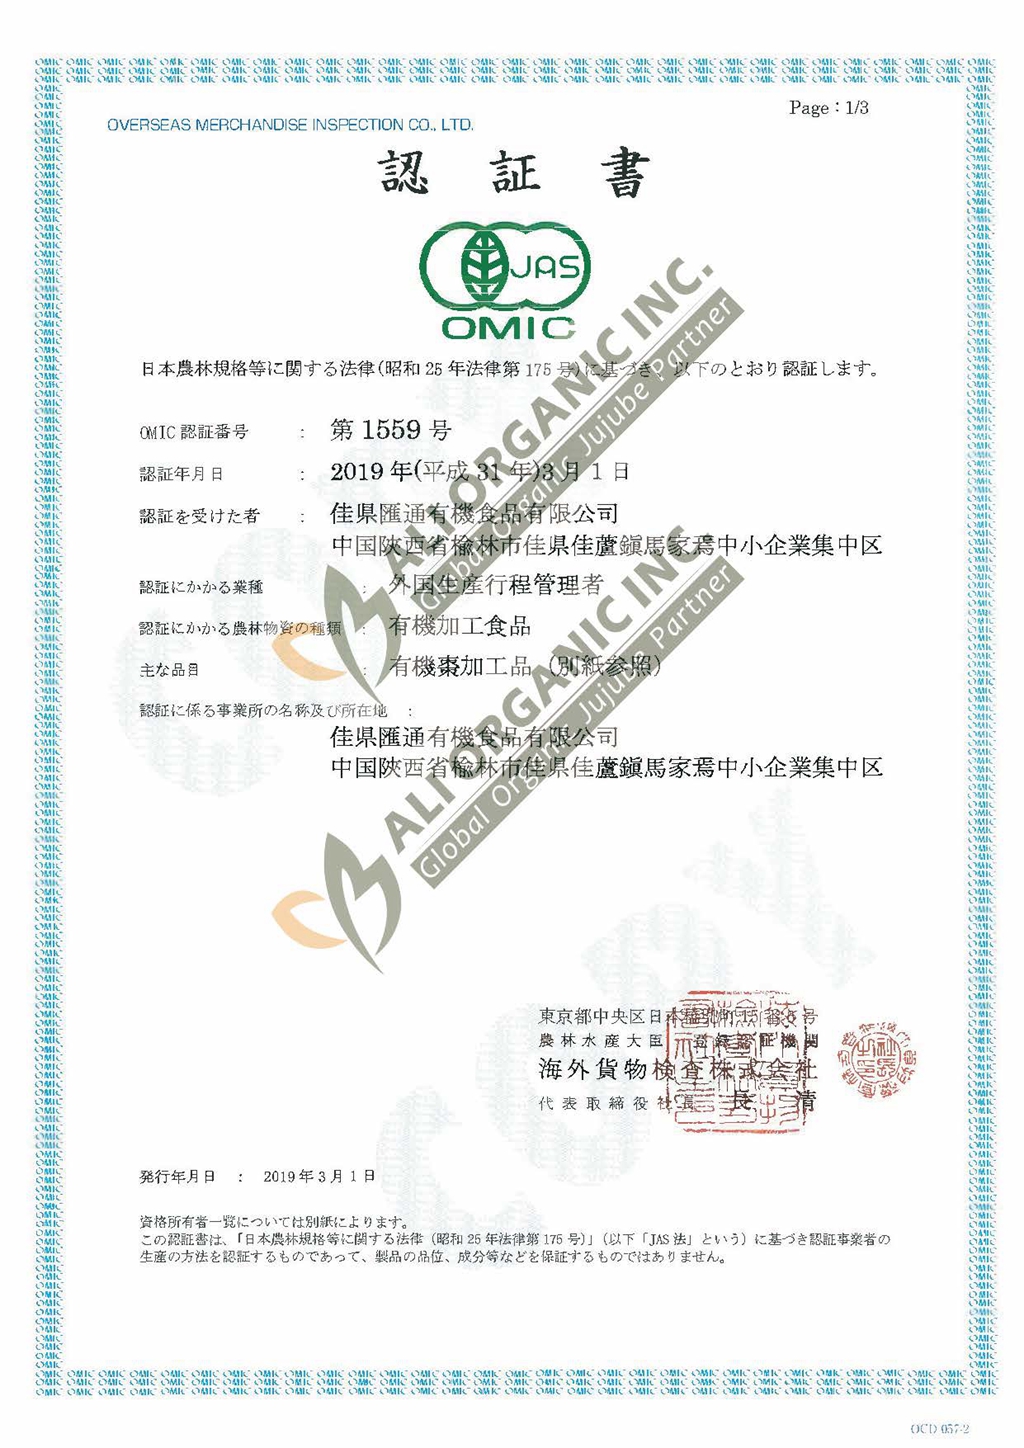 ALIORGANIC JAS certificate.jpeg